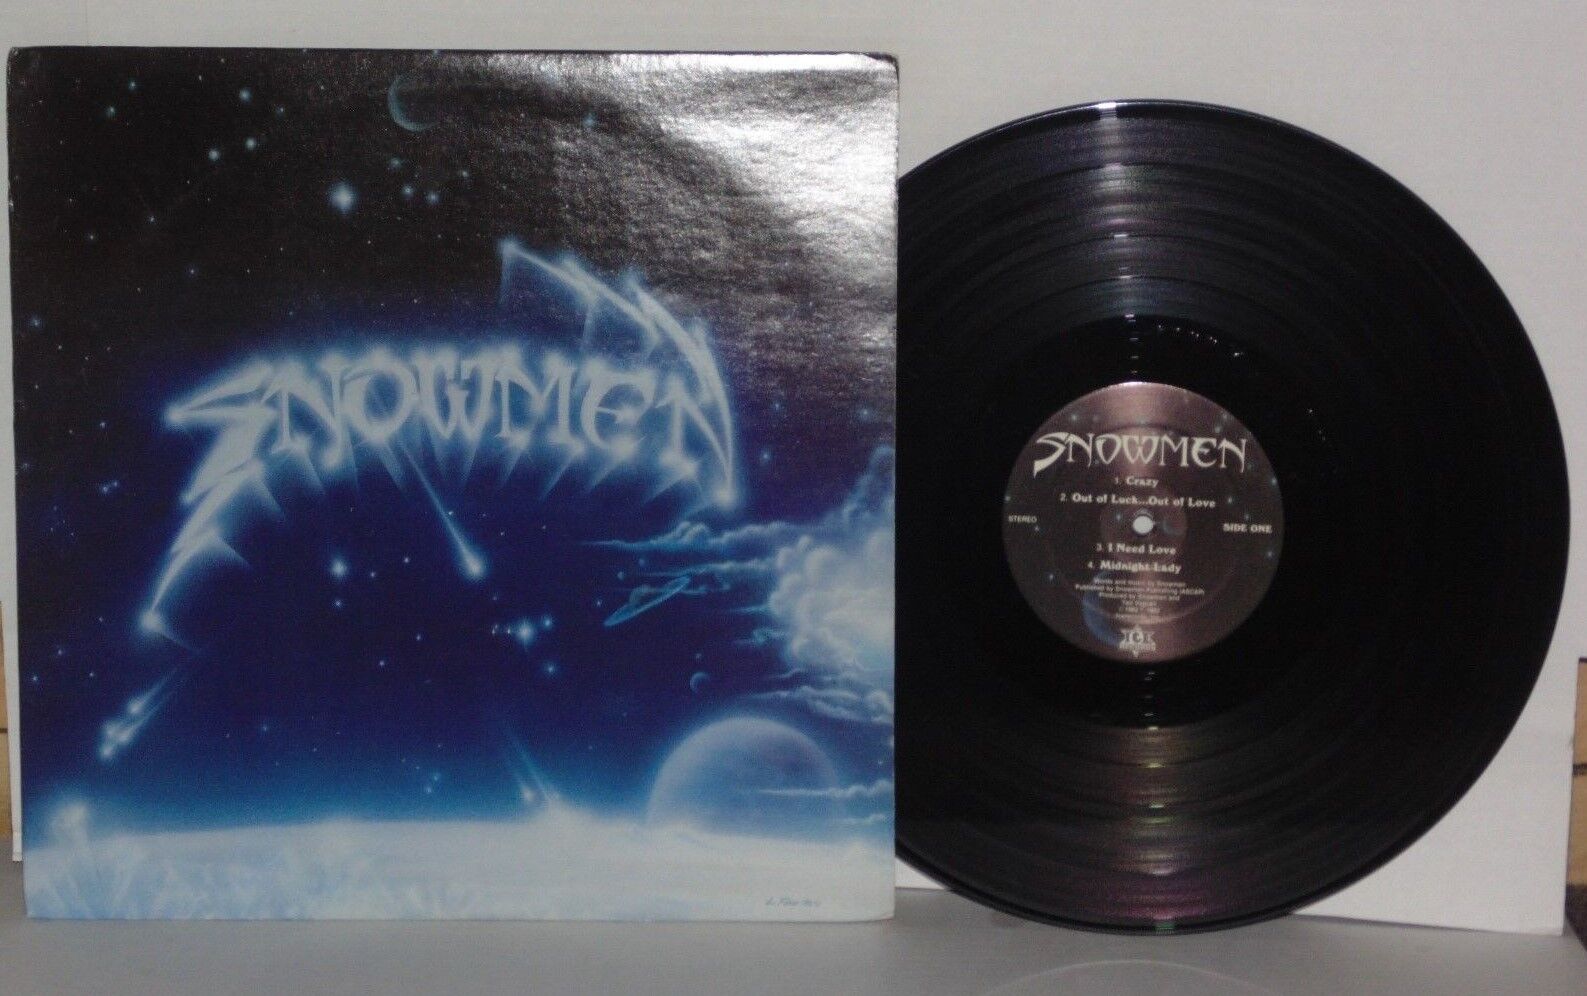 SNOWMEN LP VG+ Plays Well 1982 Ice Records Vinyl Hard Rock AOR Metal